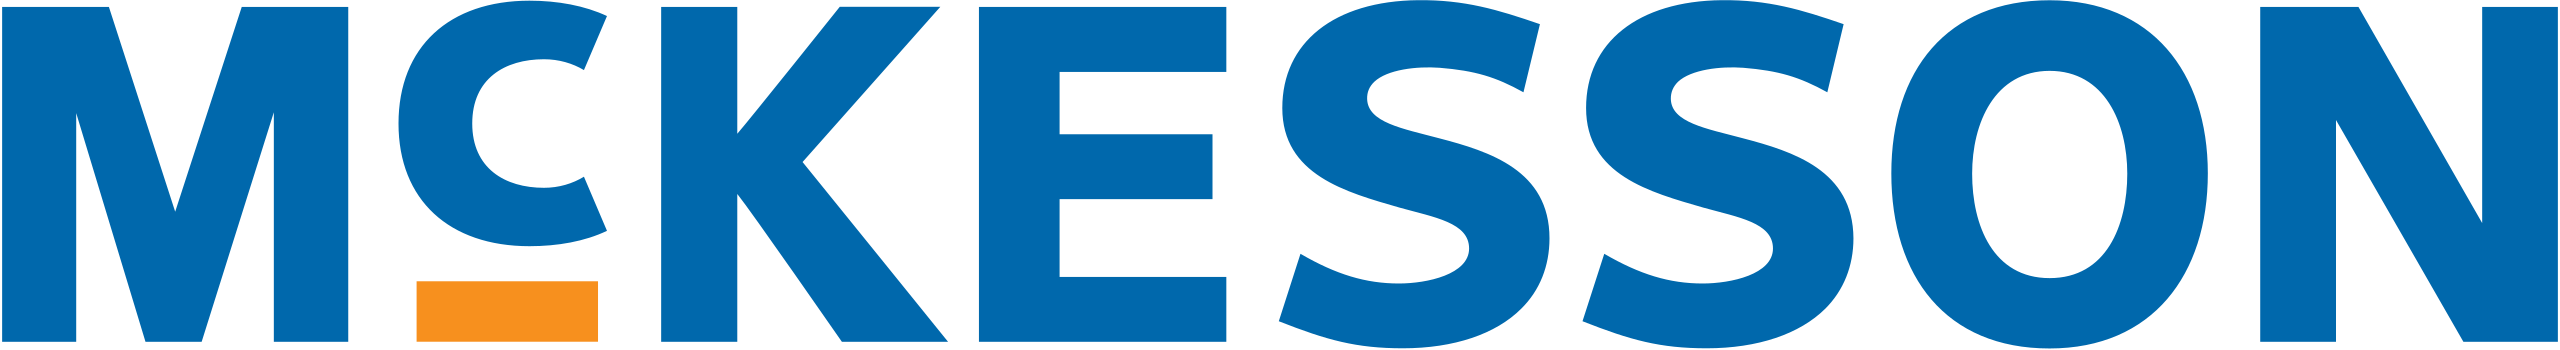 McKesson_logo.svg